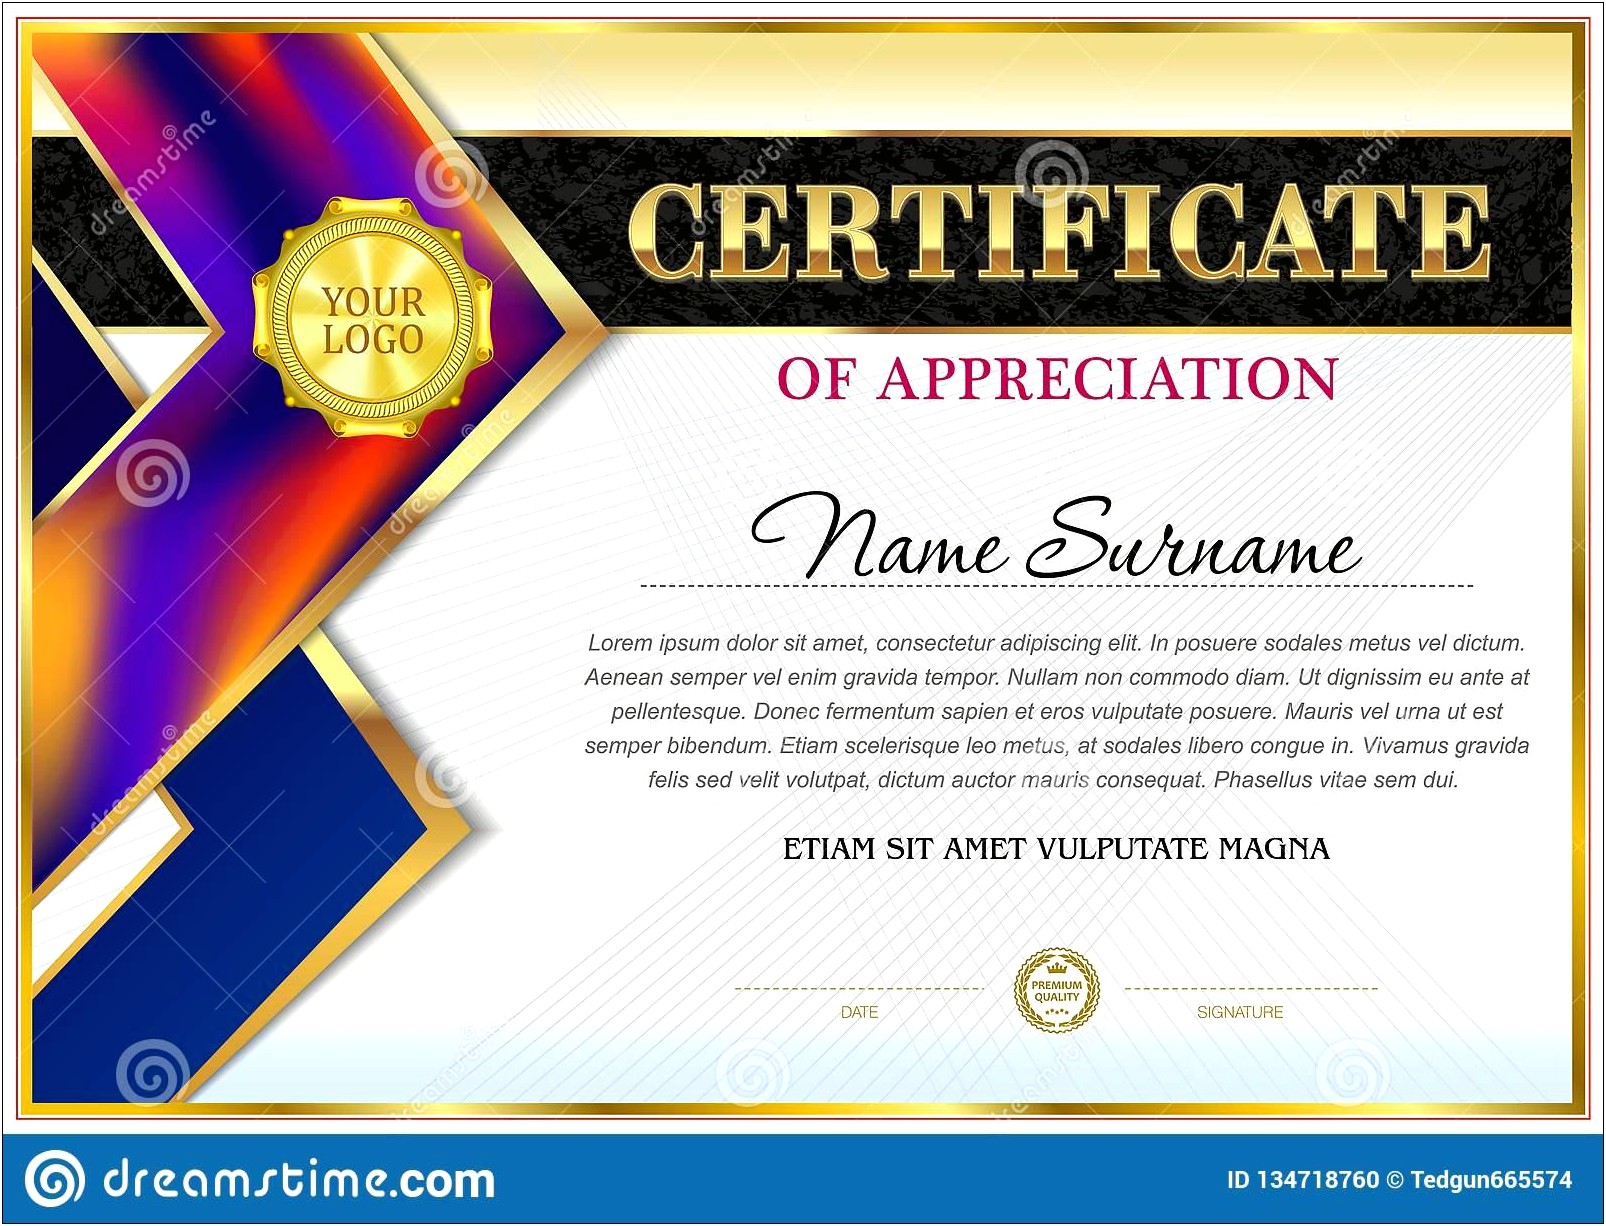 Certificate Of Appreciation Download Template Free